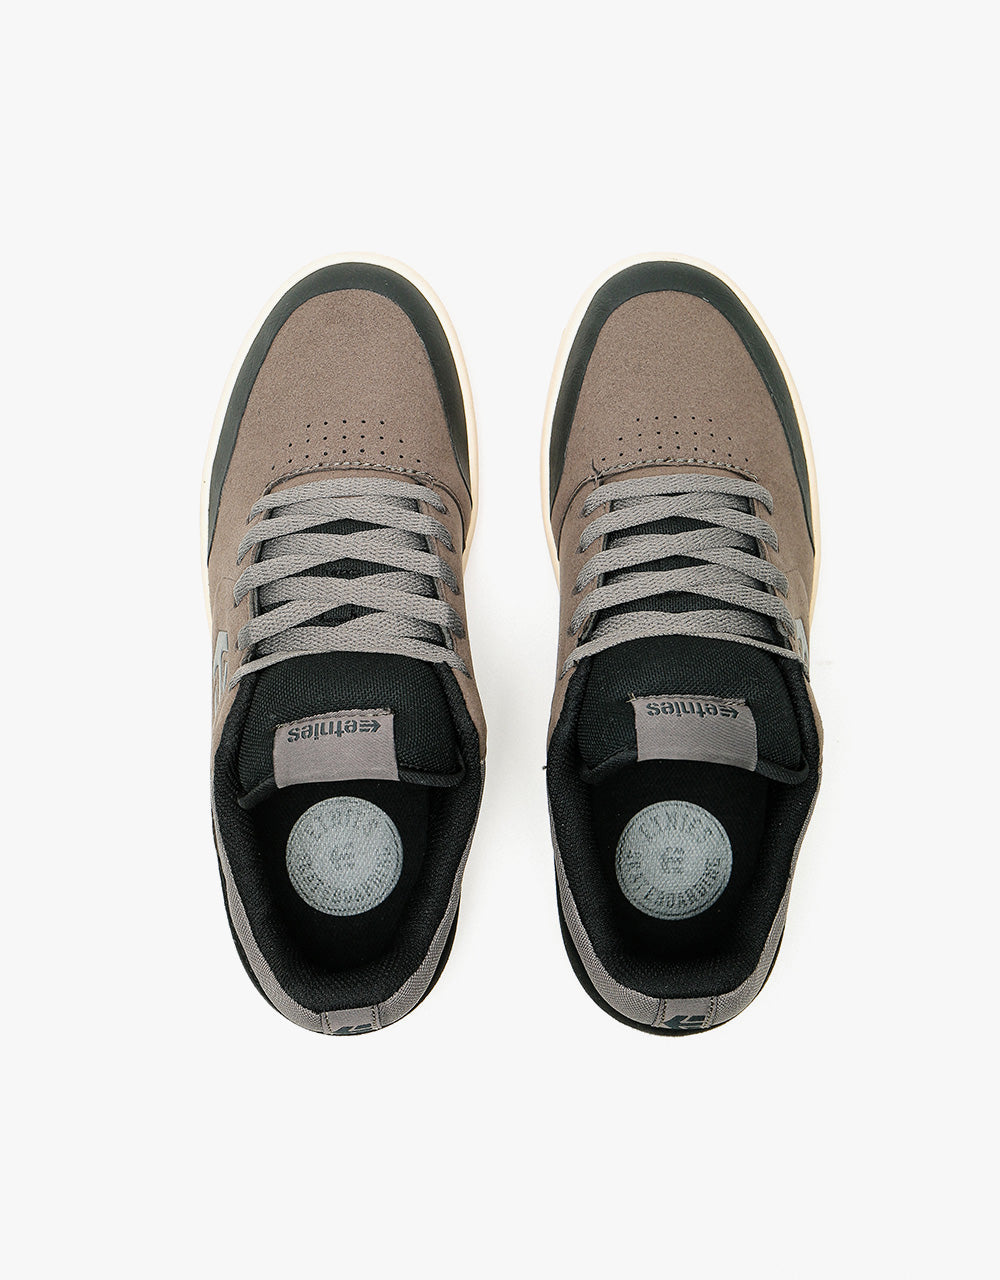 Etnies x Michelin Marana Skate Shoes - Dark Grey/Black/Gum